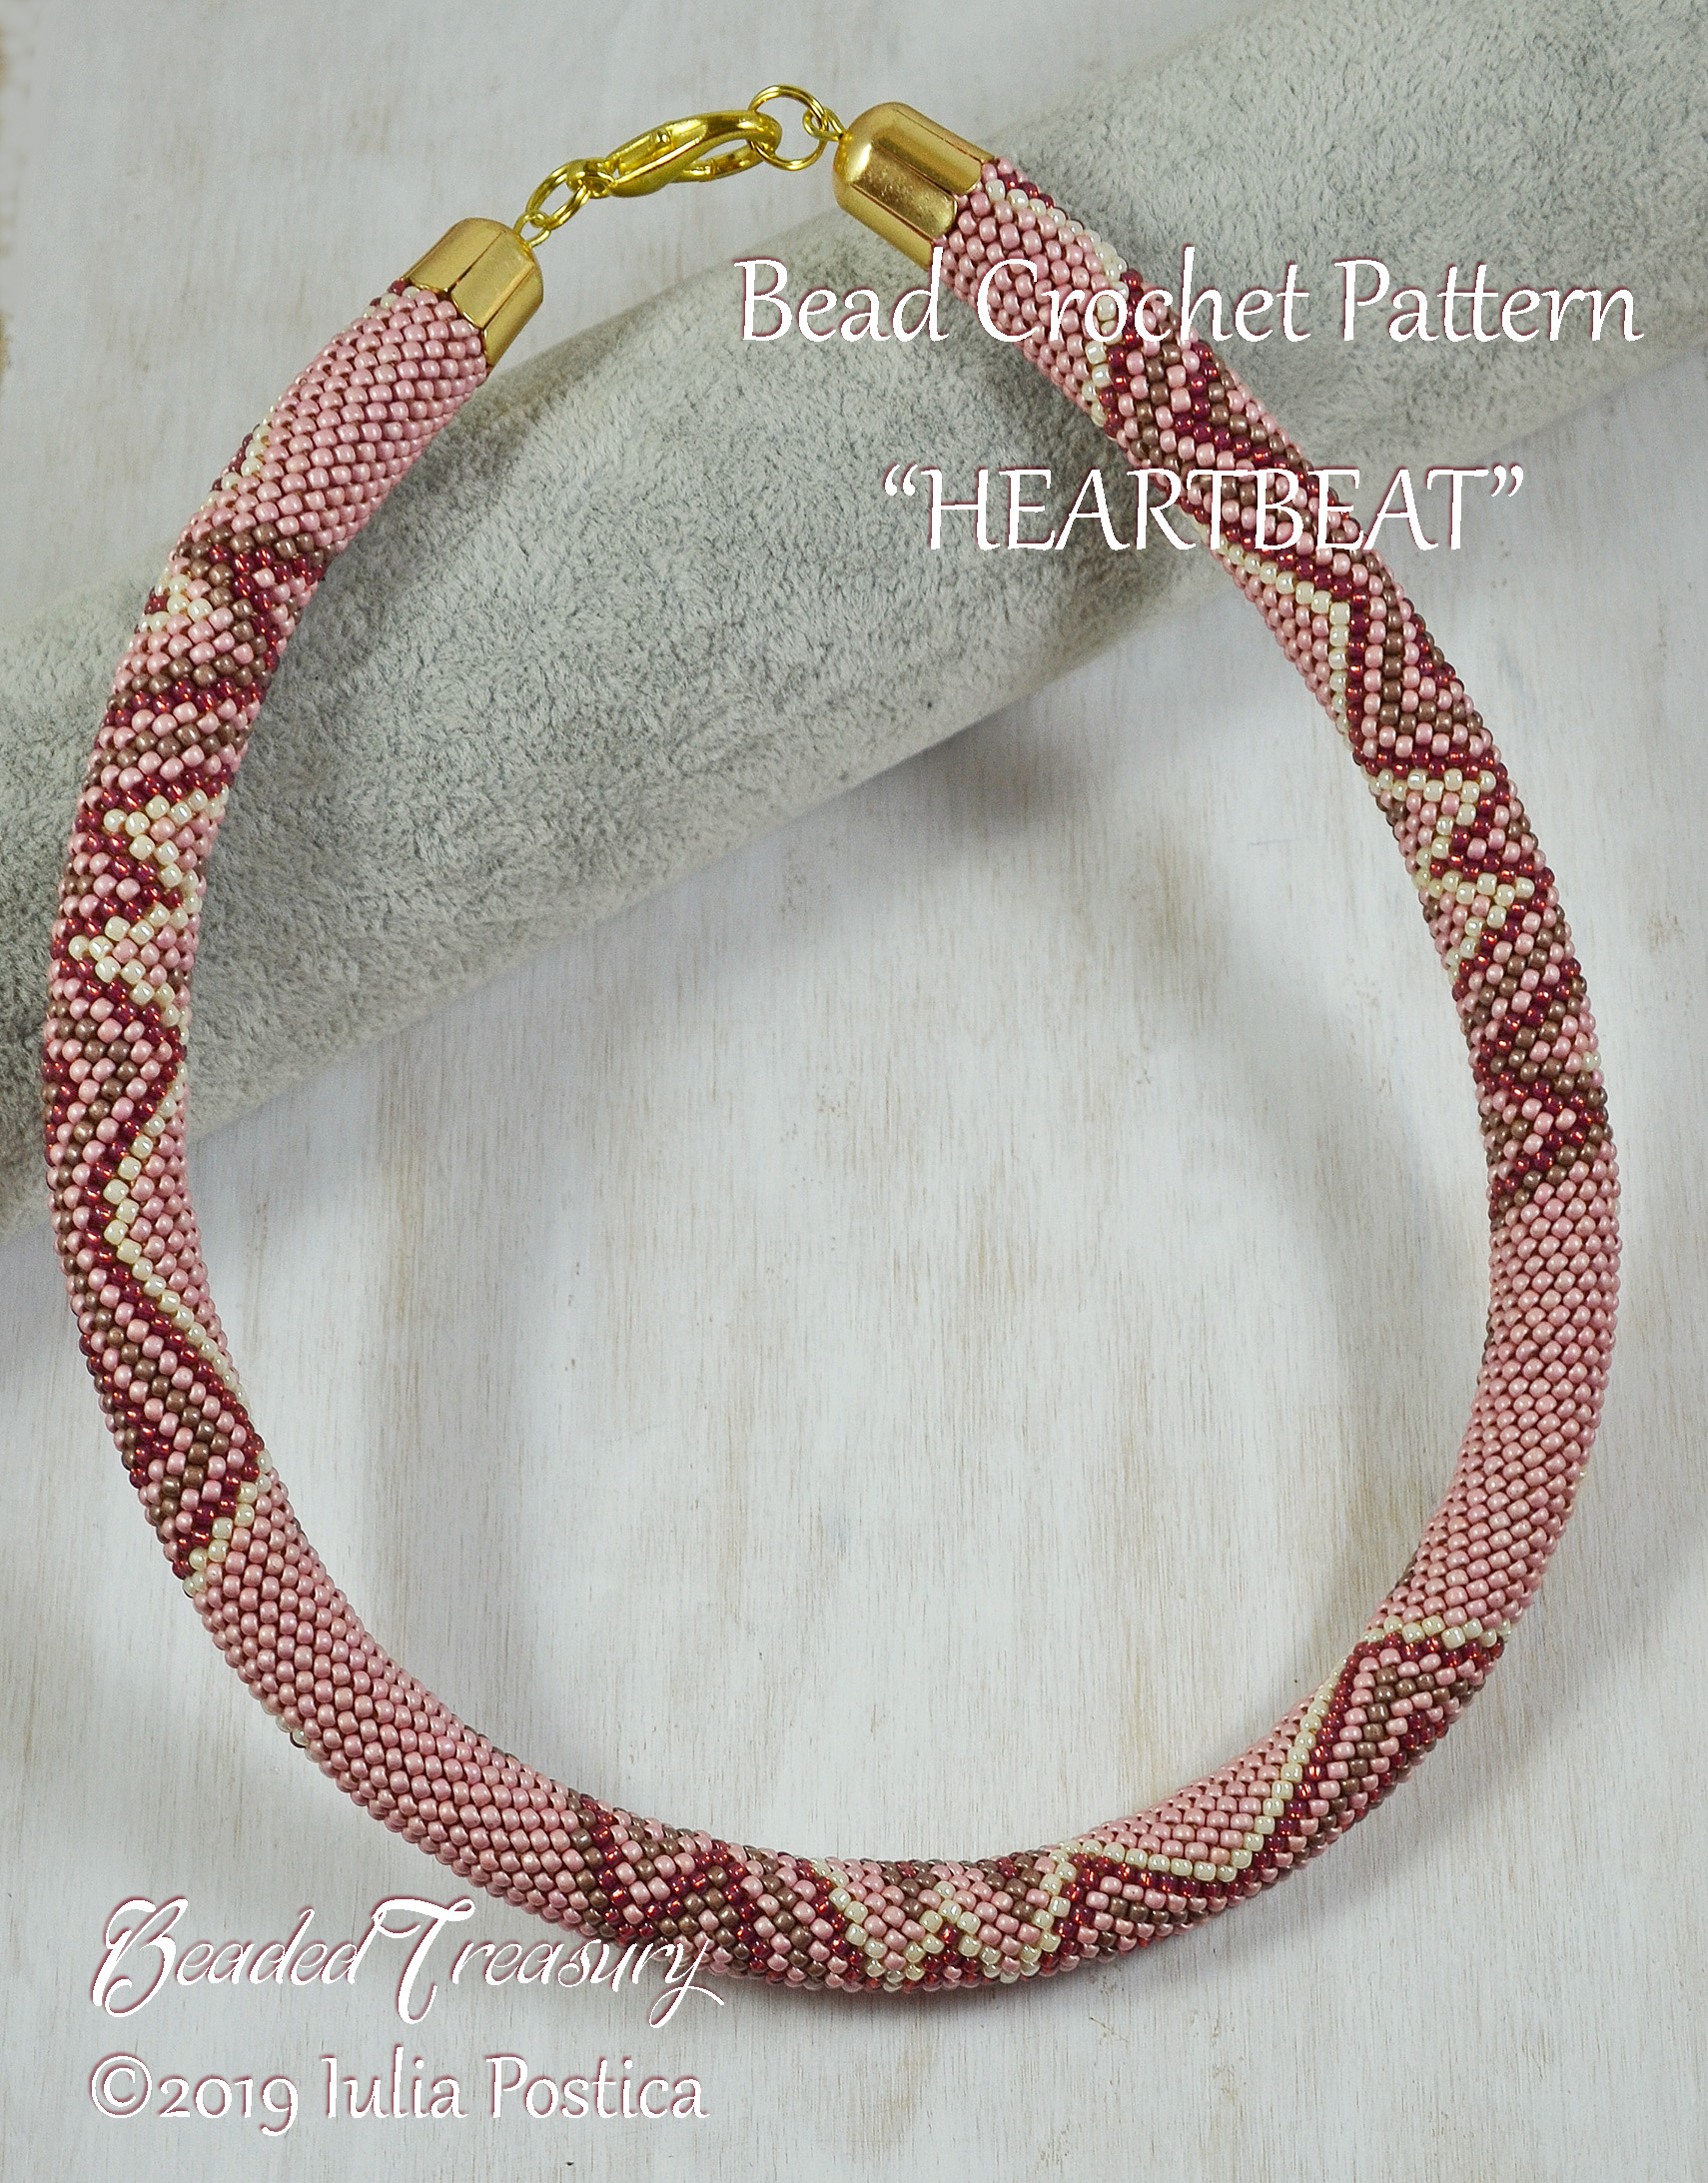 Bead Crochet Patterns Heartbeat Bead Crochet Pattern Beadedtreasury